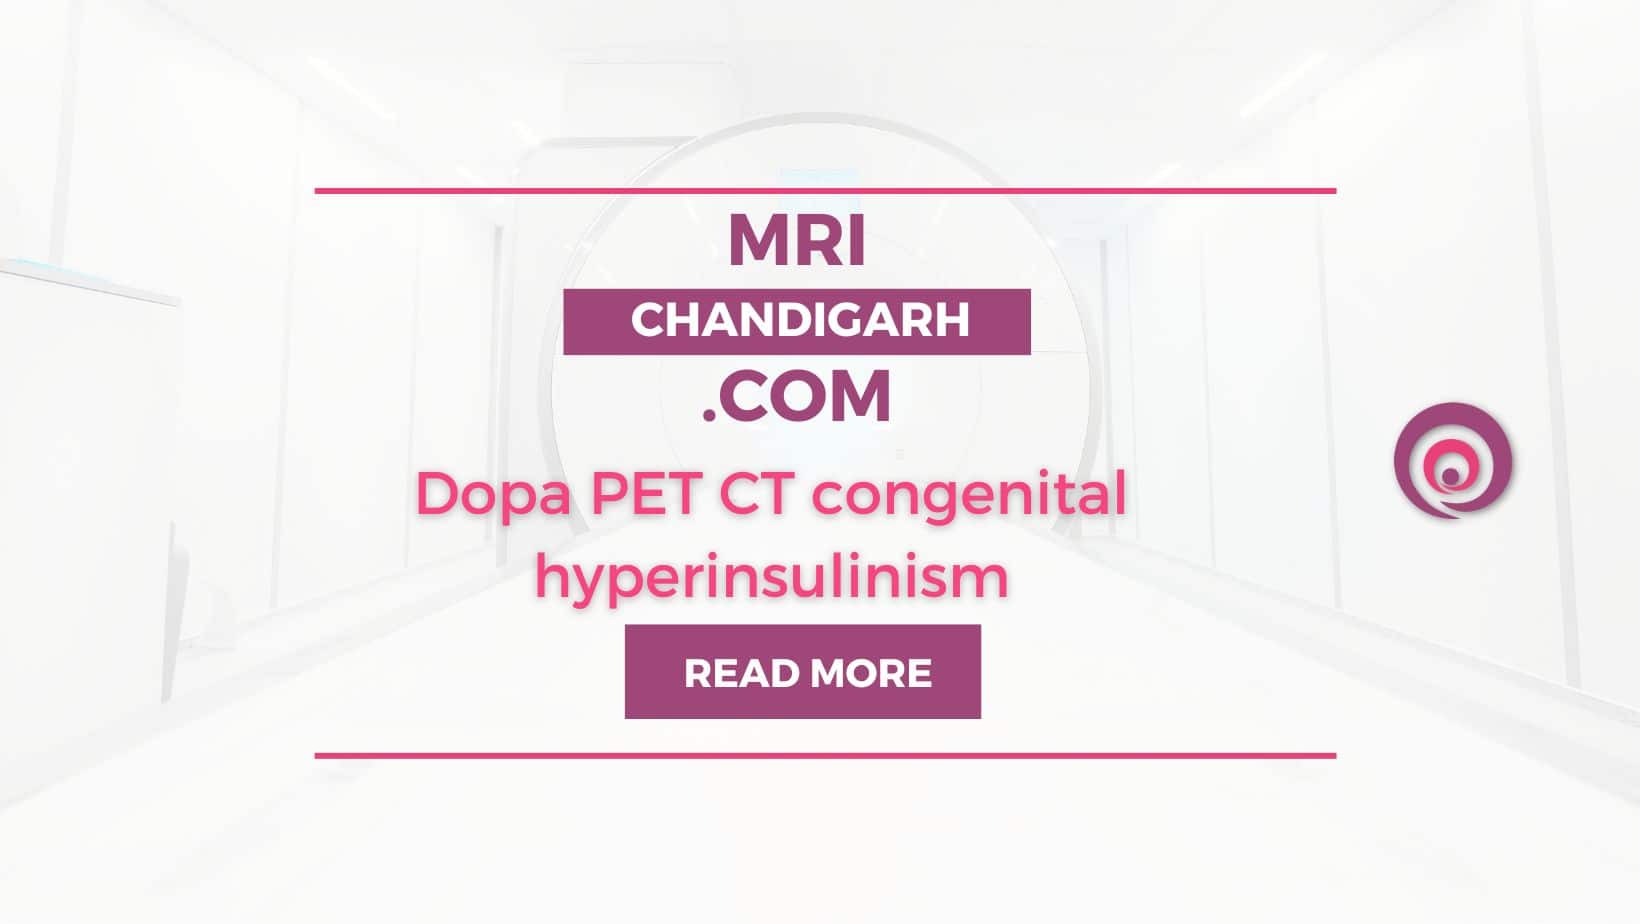 Dopa PET CT congenital hyperinsulinism